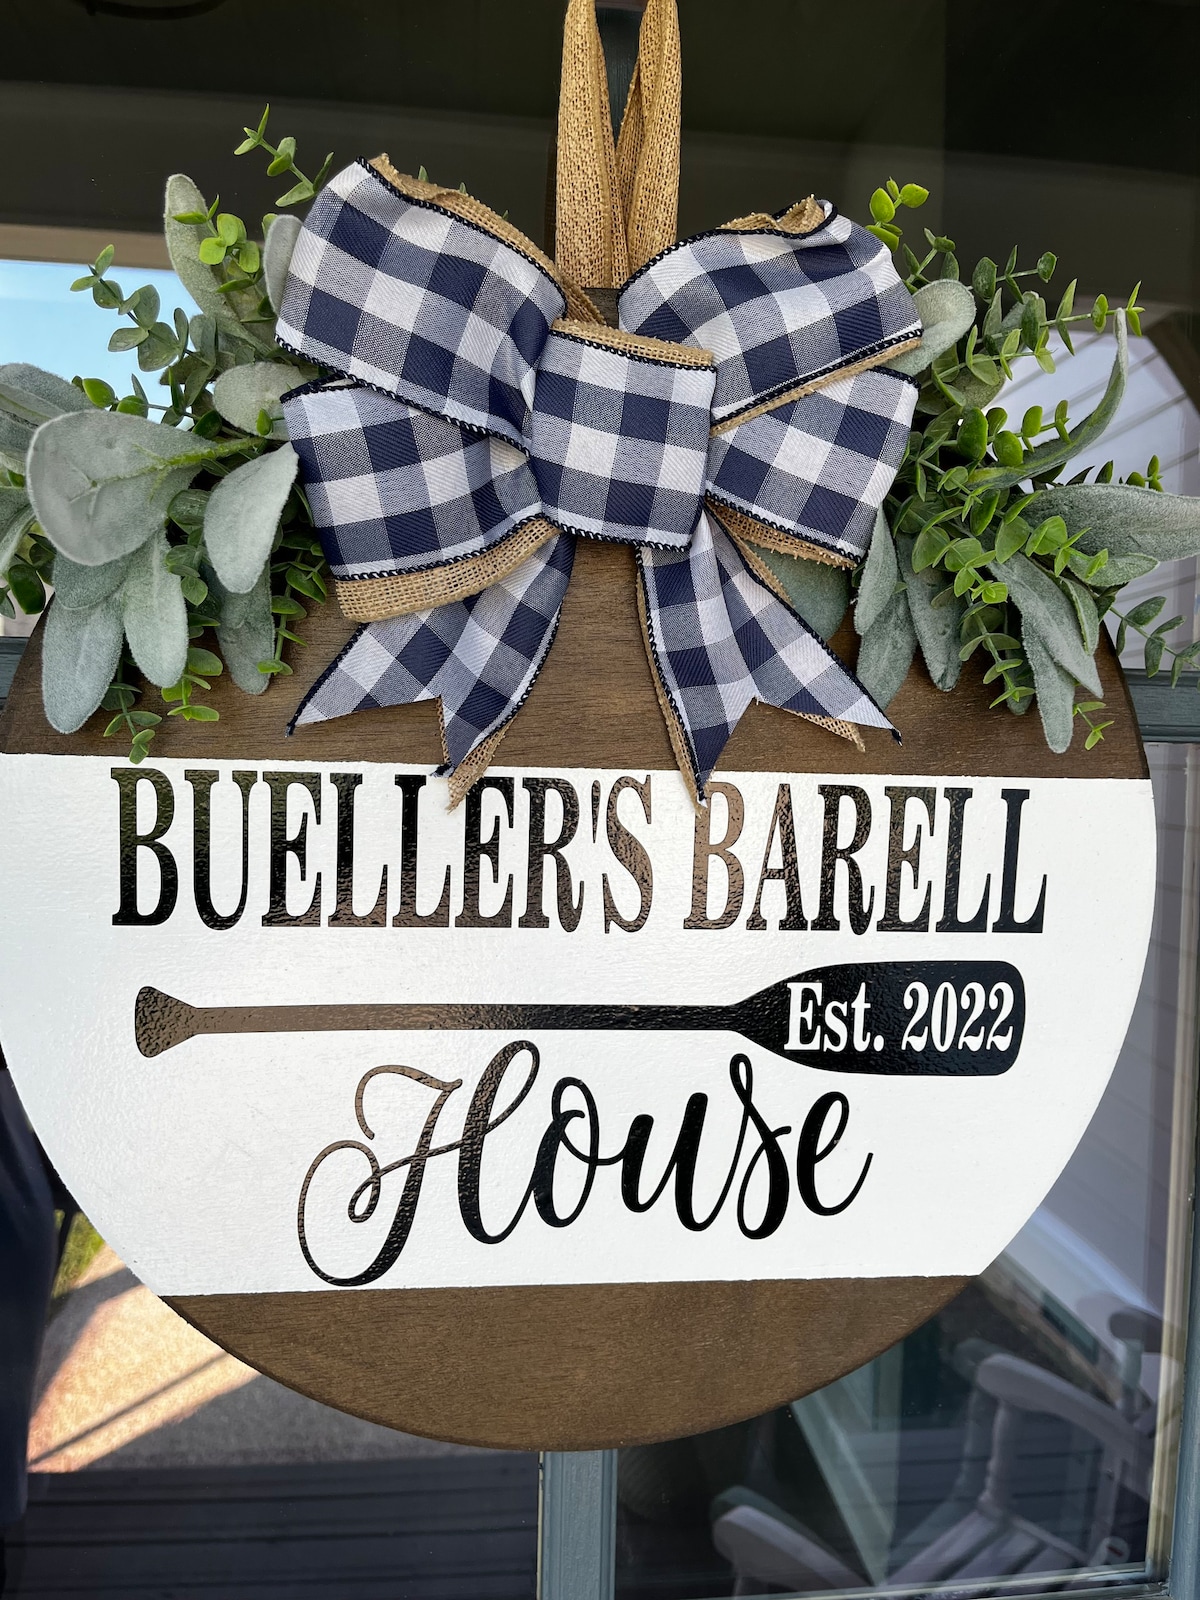 Bueller's Barrel House - Your Exquisite Getaway 
(Golf Cart Included)